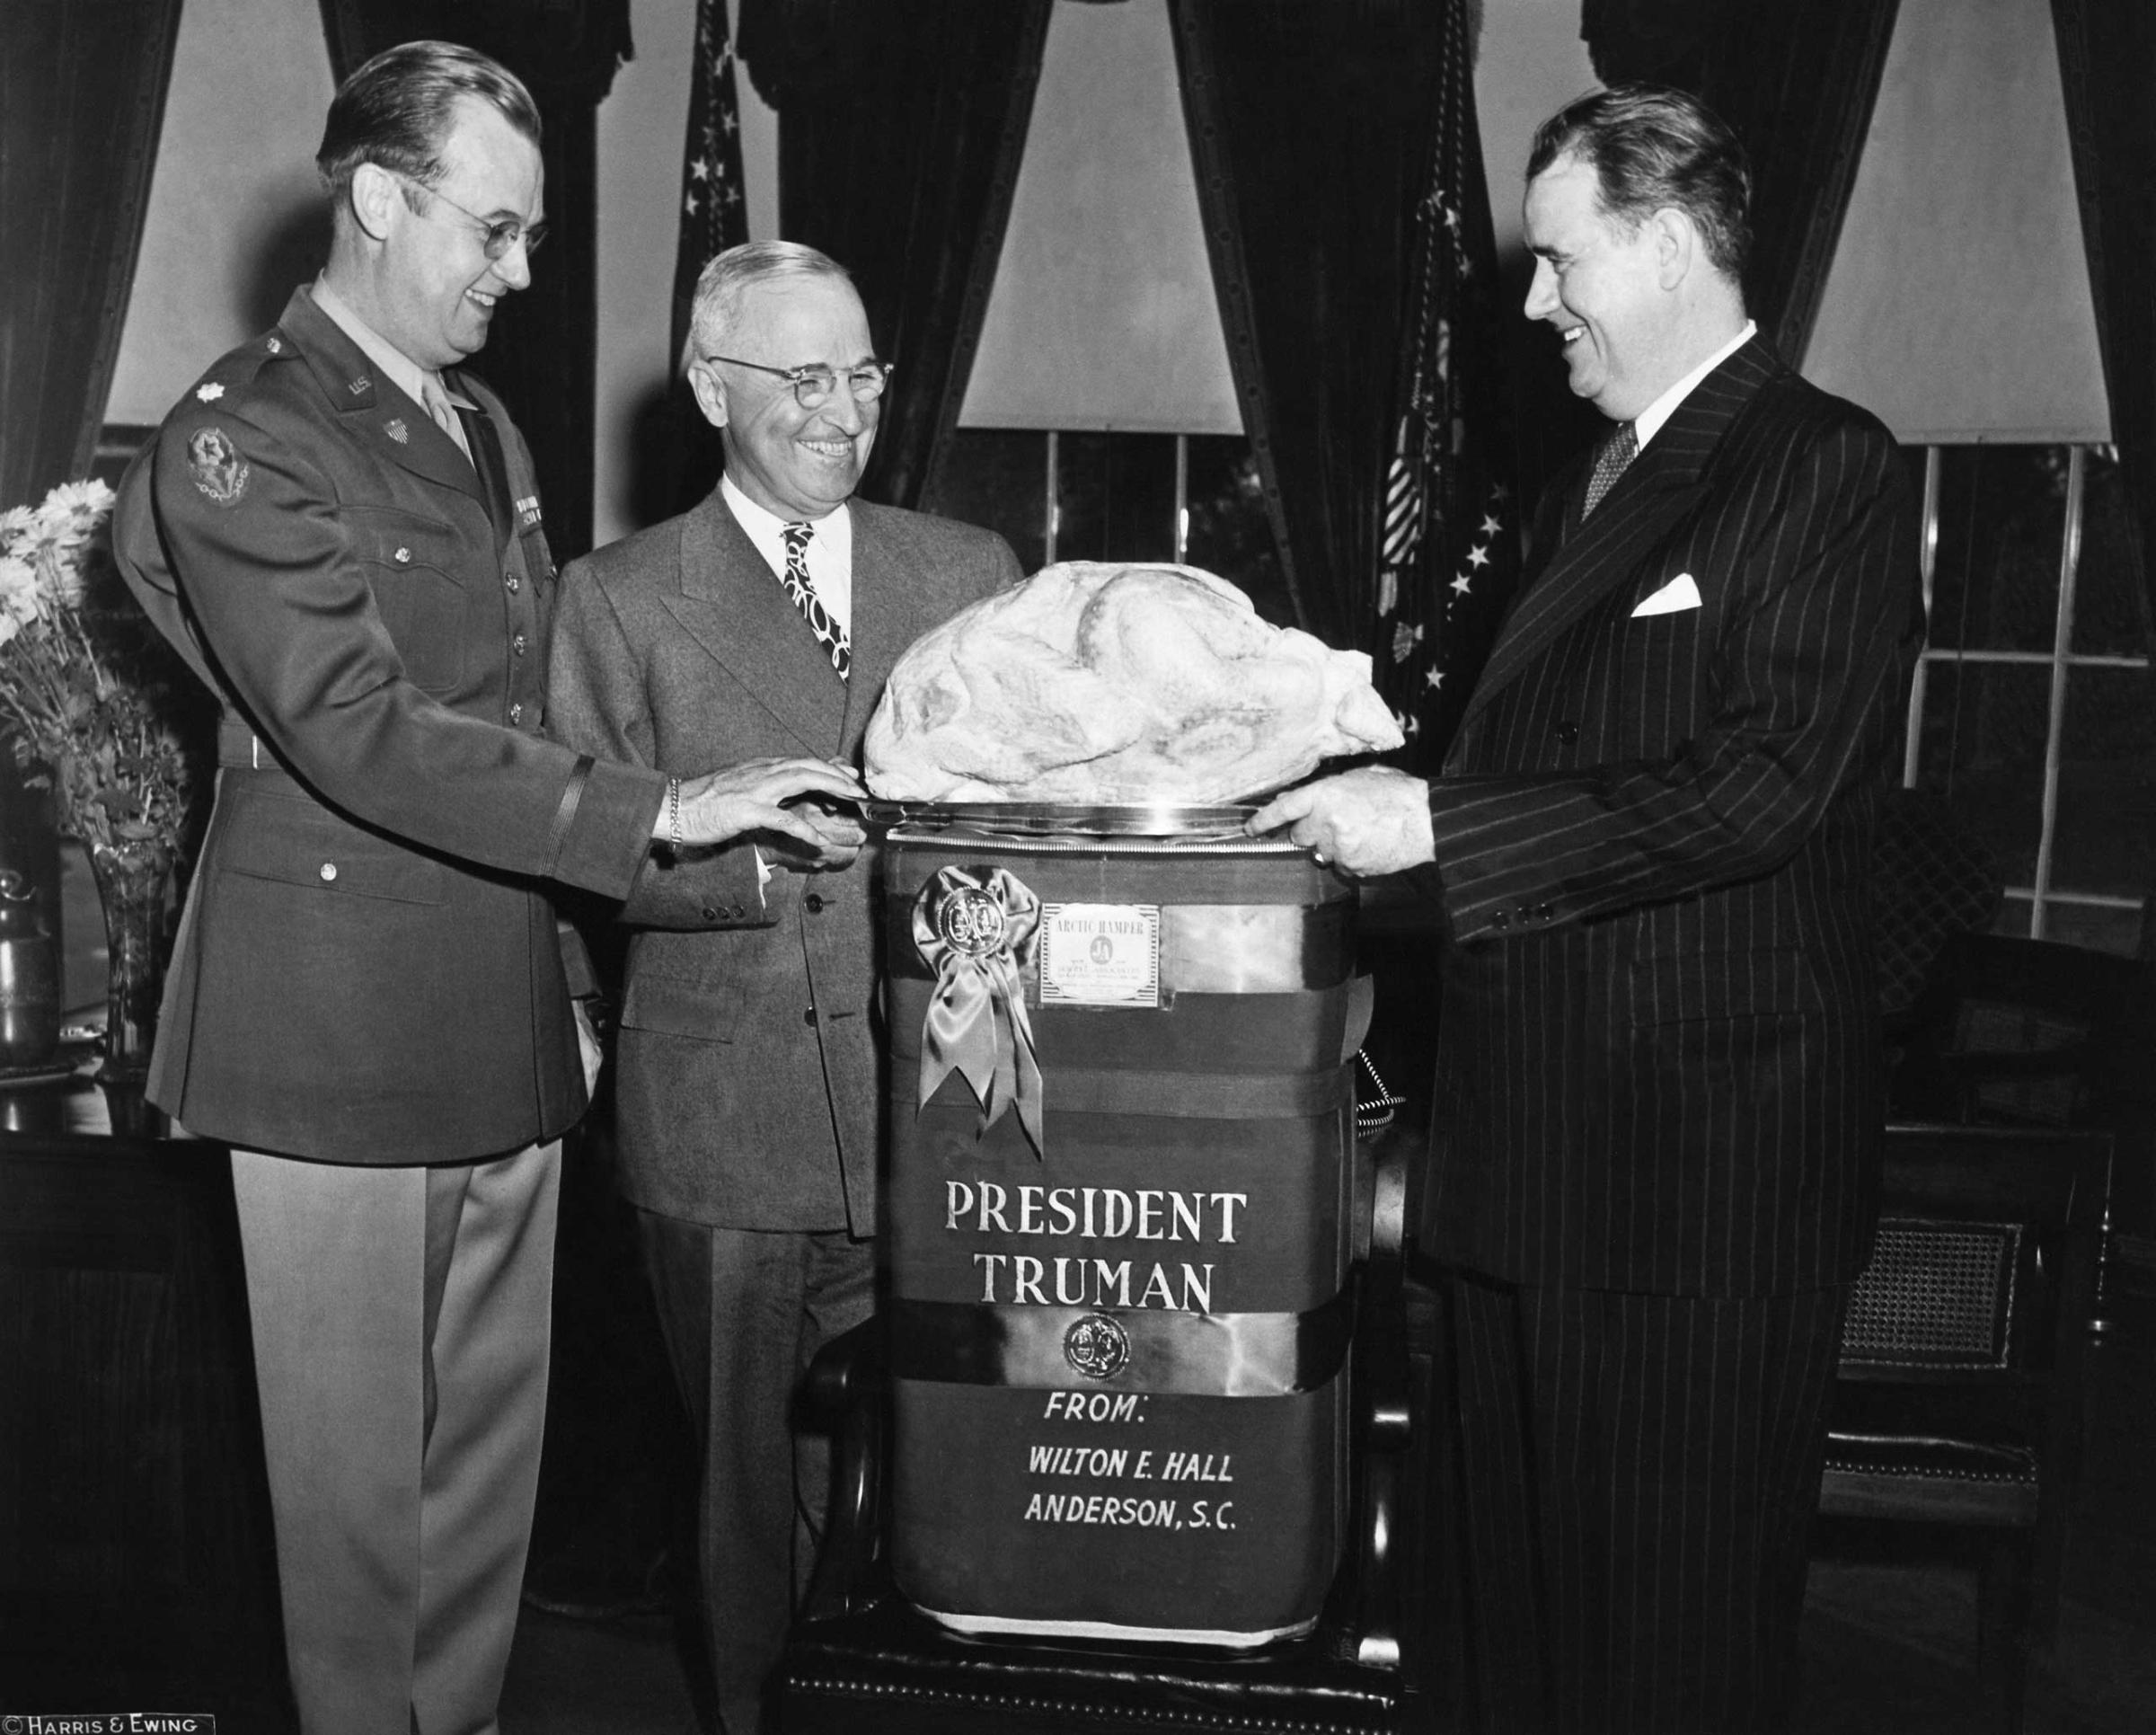 NOVEMBER 25TH 1946, WASHINGTON, PRESIDENT TRUMAN RECEIVING THANKSGIVING TURKEY